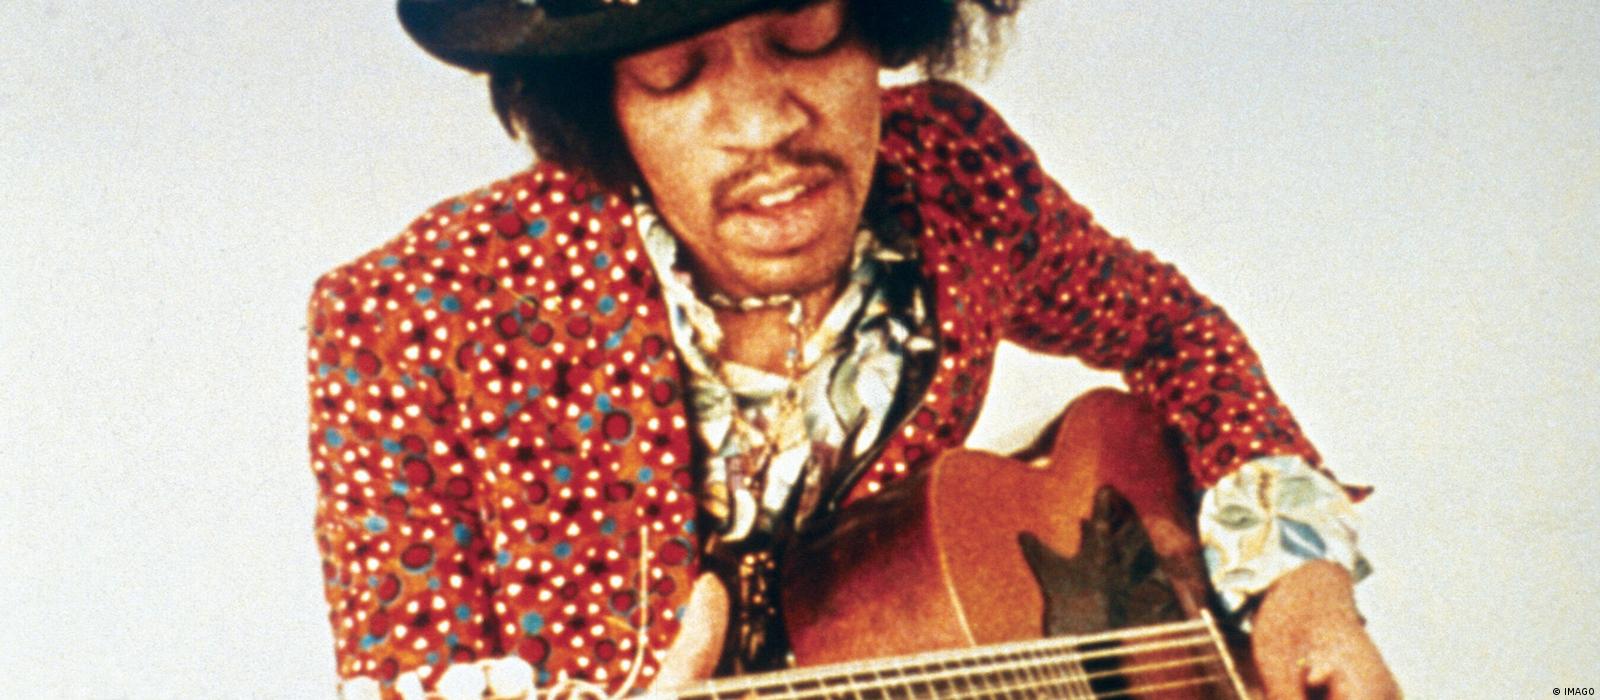 Forever a guitar legend: Jimi Hendrix â€“ DW â€“ 11/27/2022